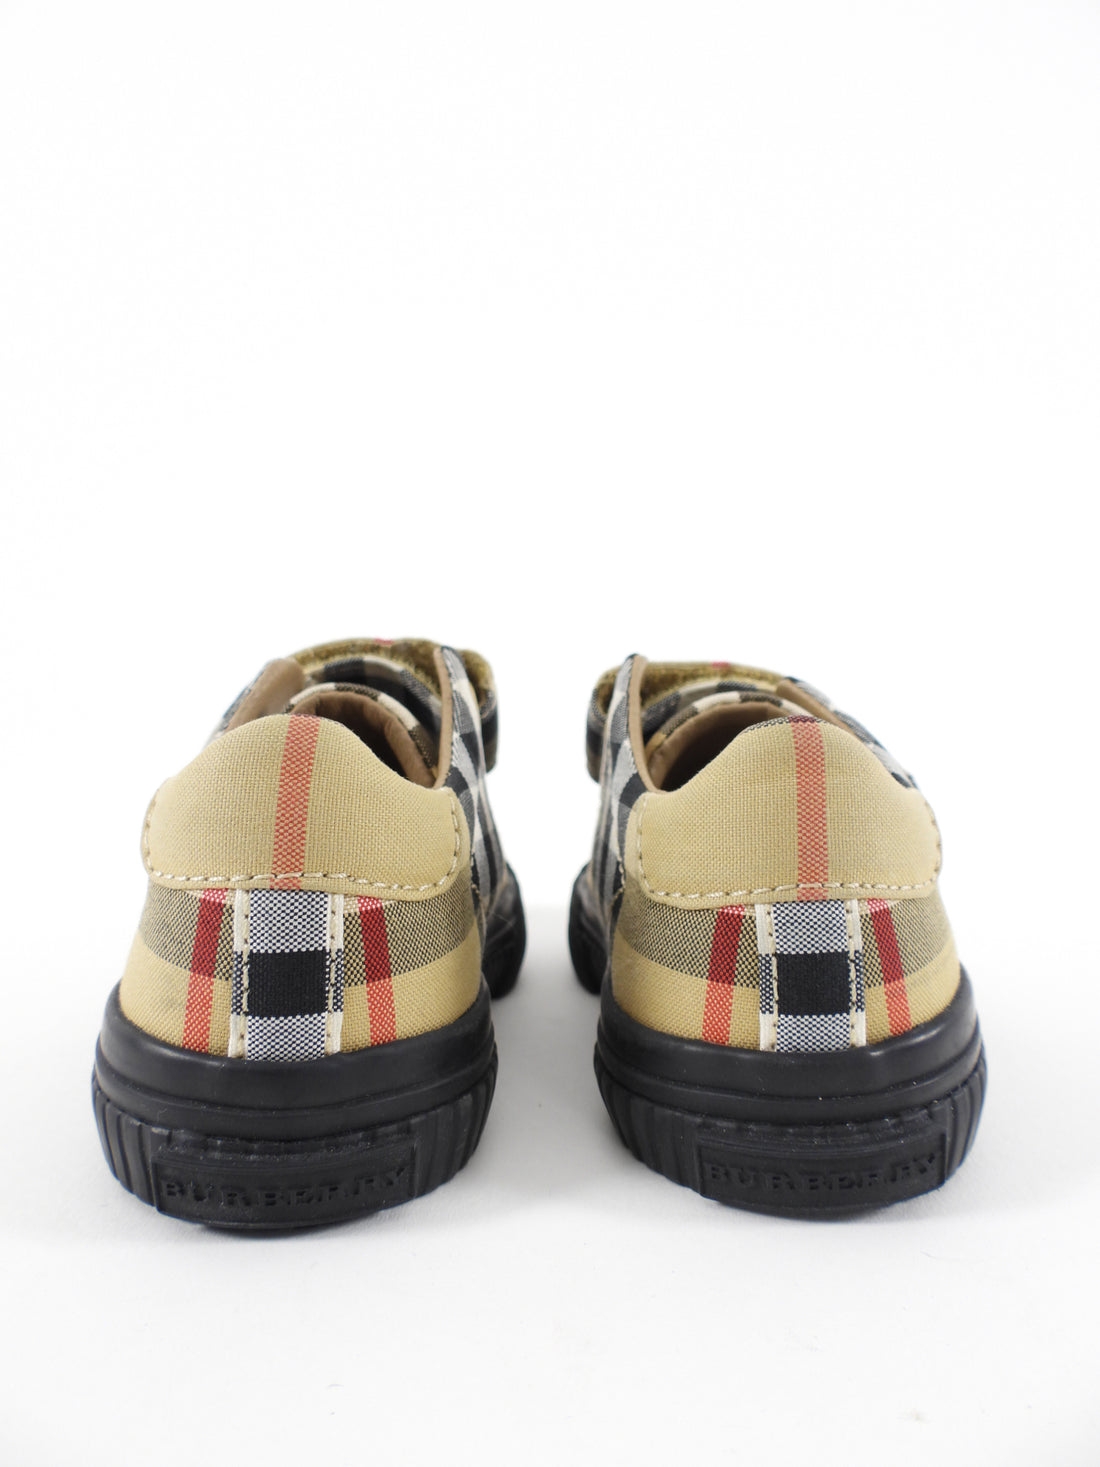 Burberry Baby Nova Check Sneakers - 19 US